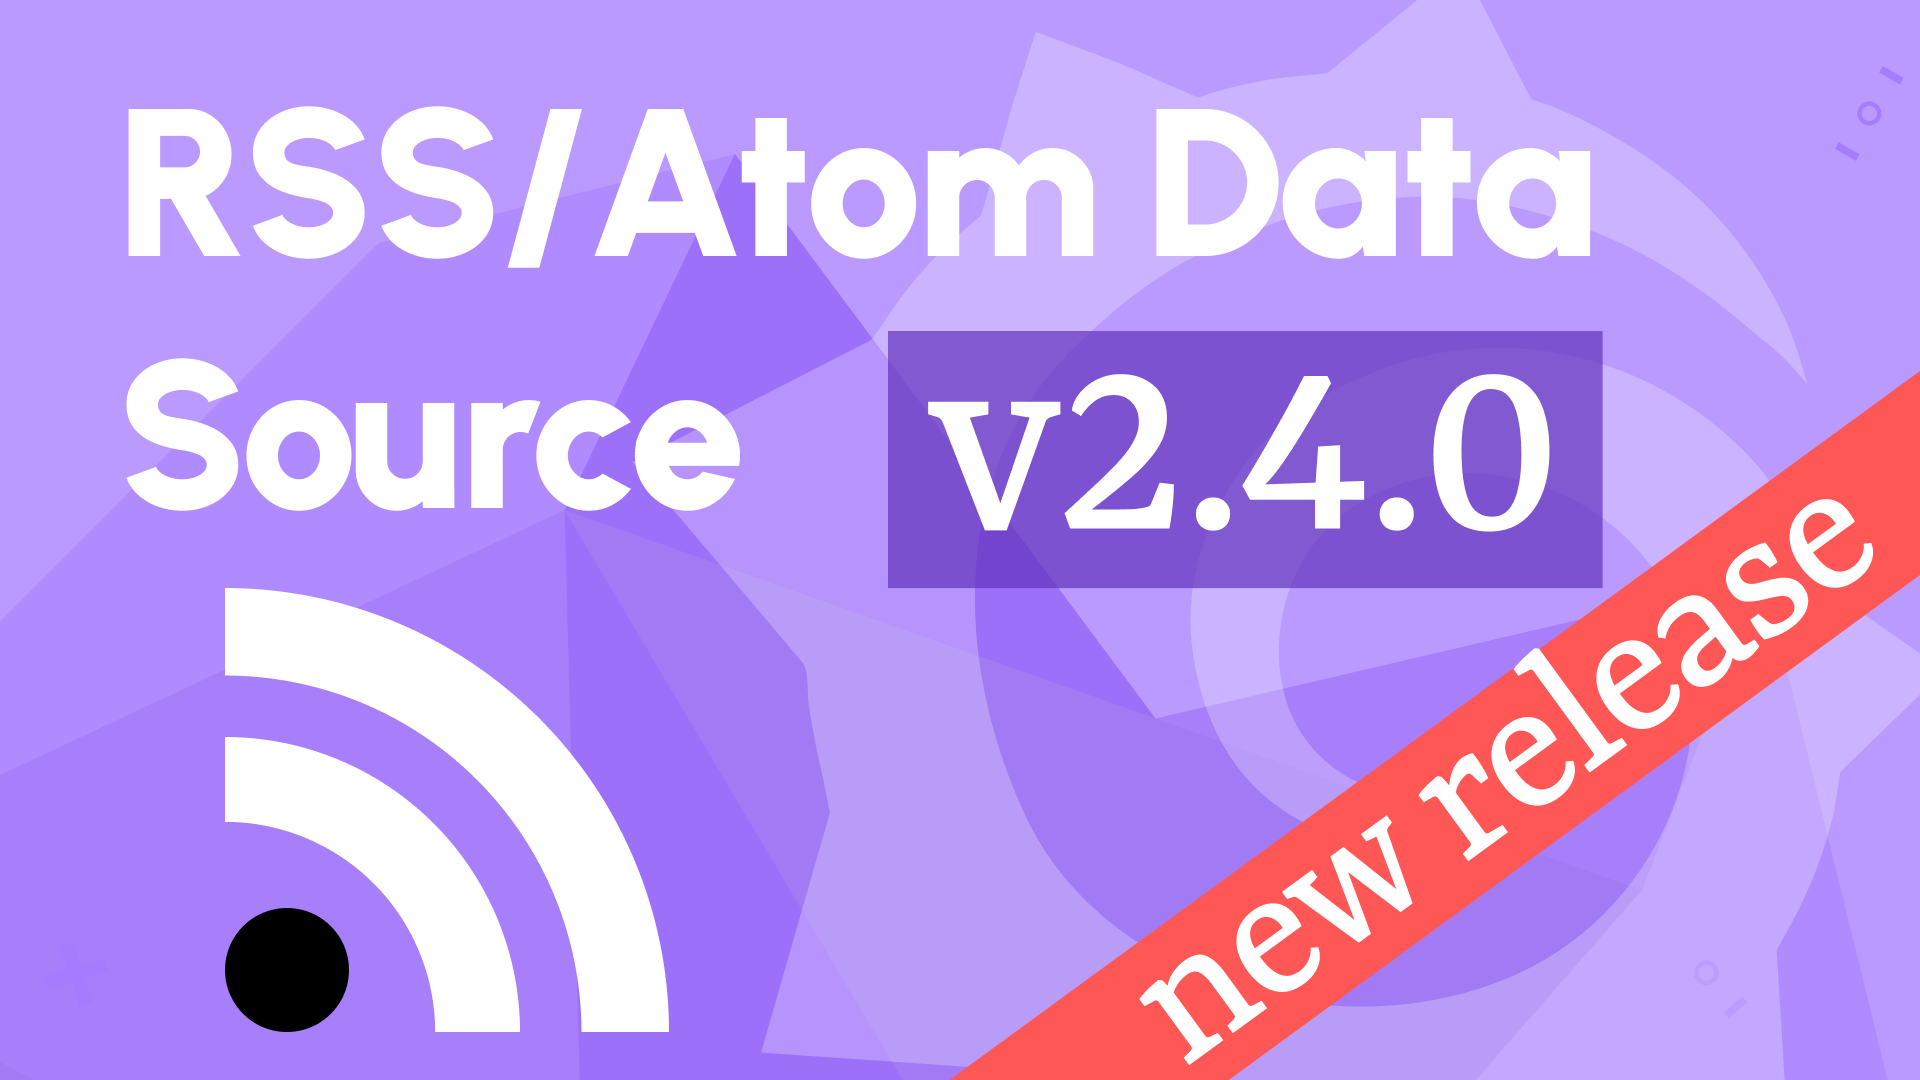 RSS/Atom Data Source 2.4.0